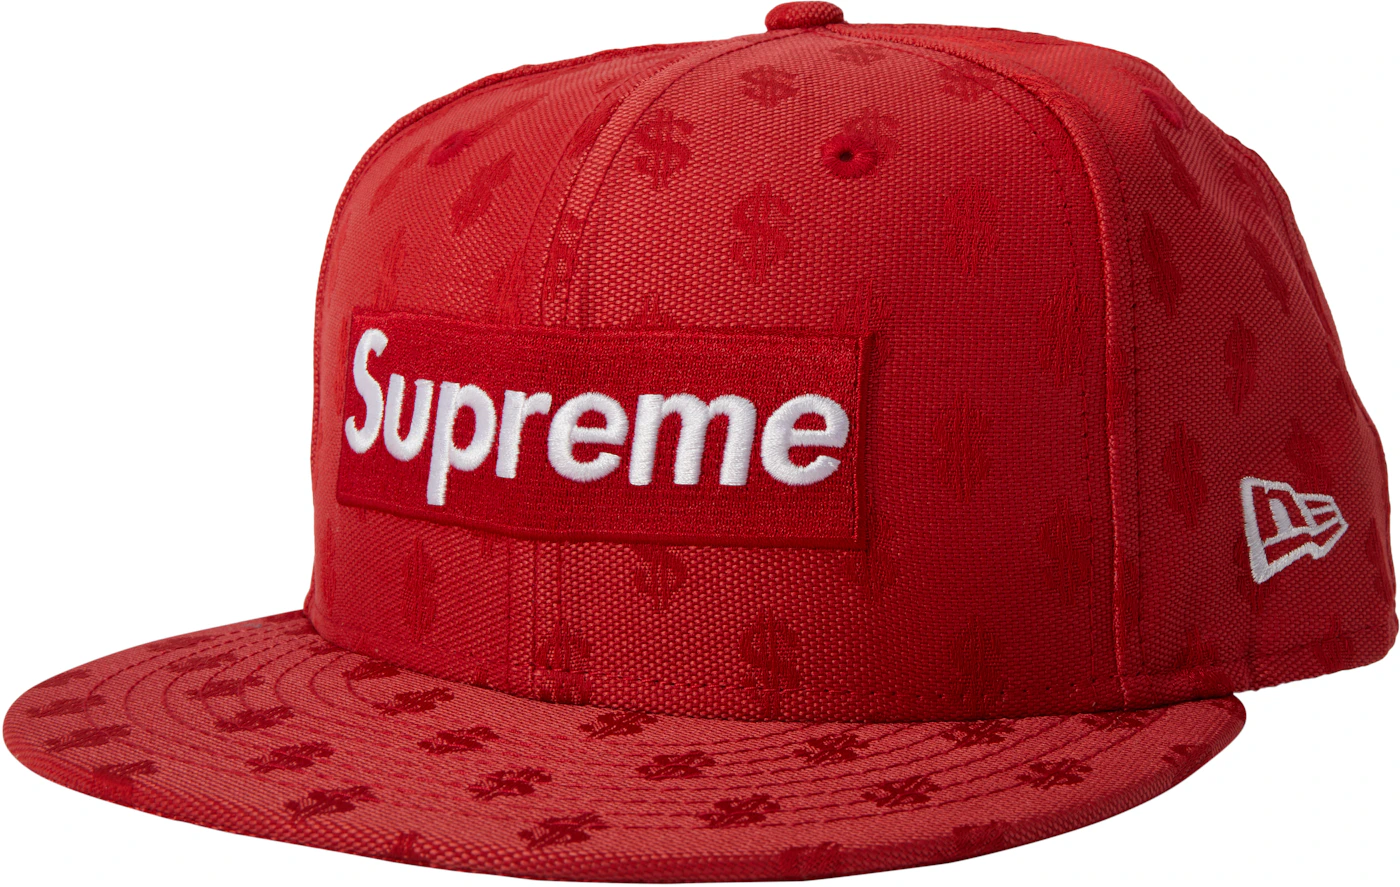 supreme lv hat red